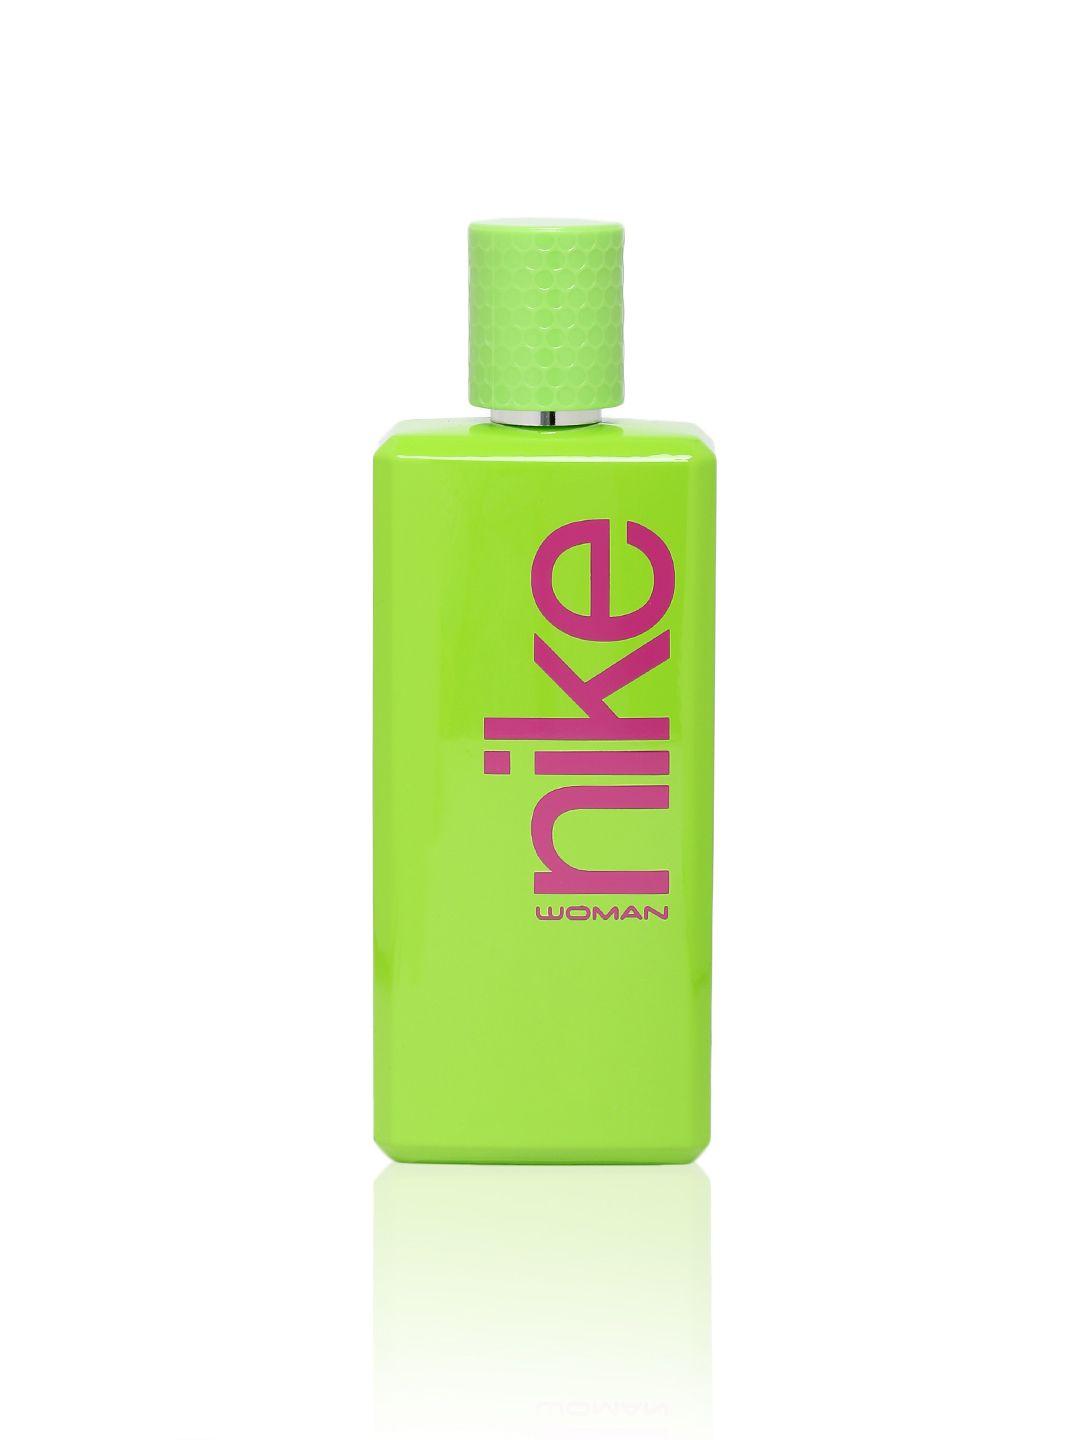 nike-fragrances-women-green-eau-de-toilette-natural-spray